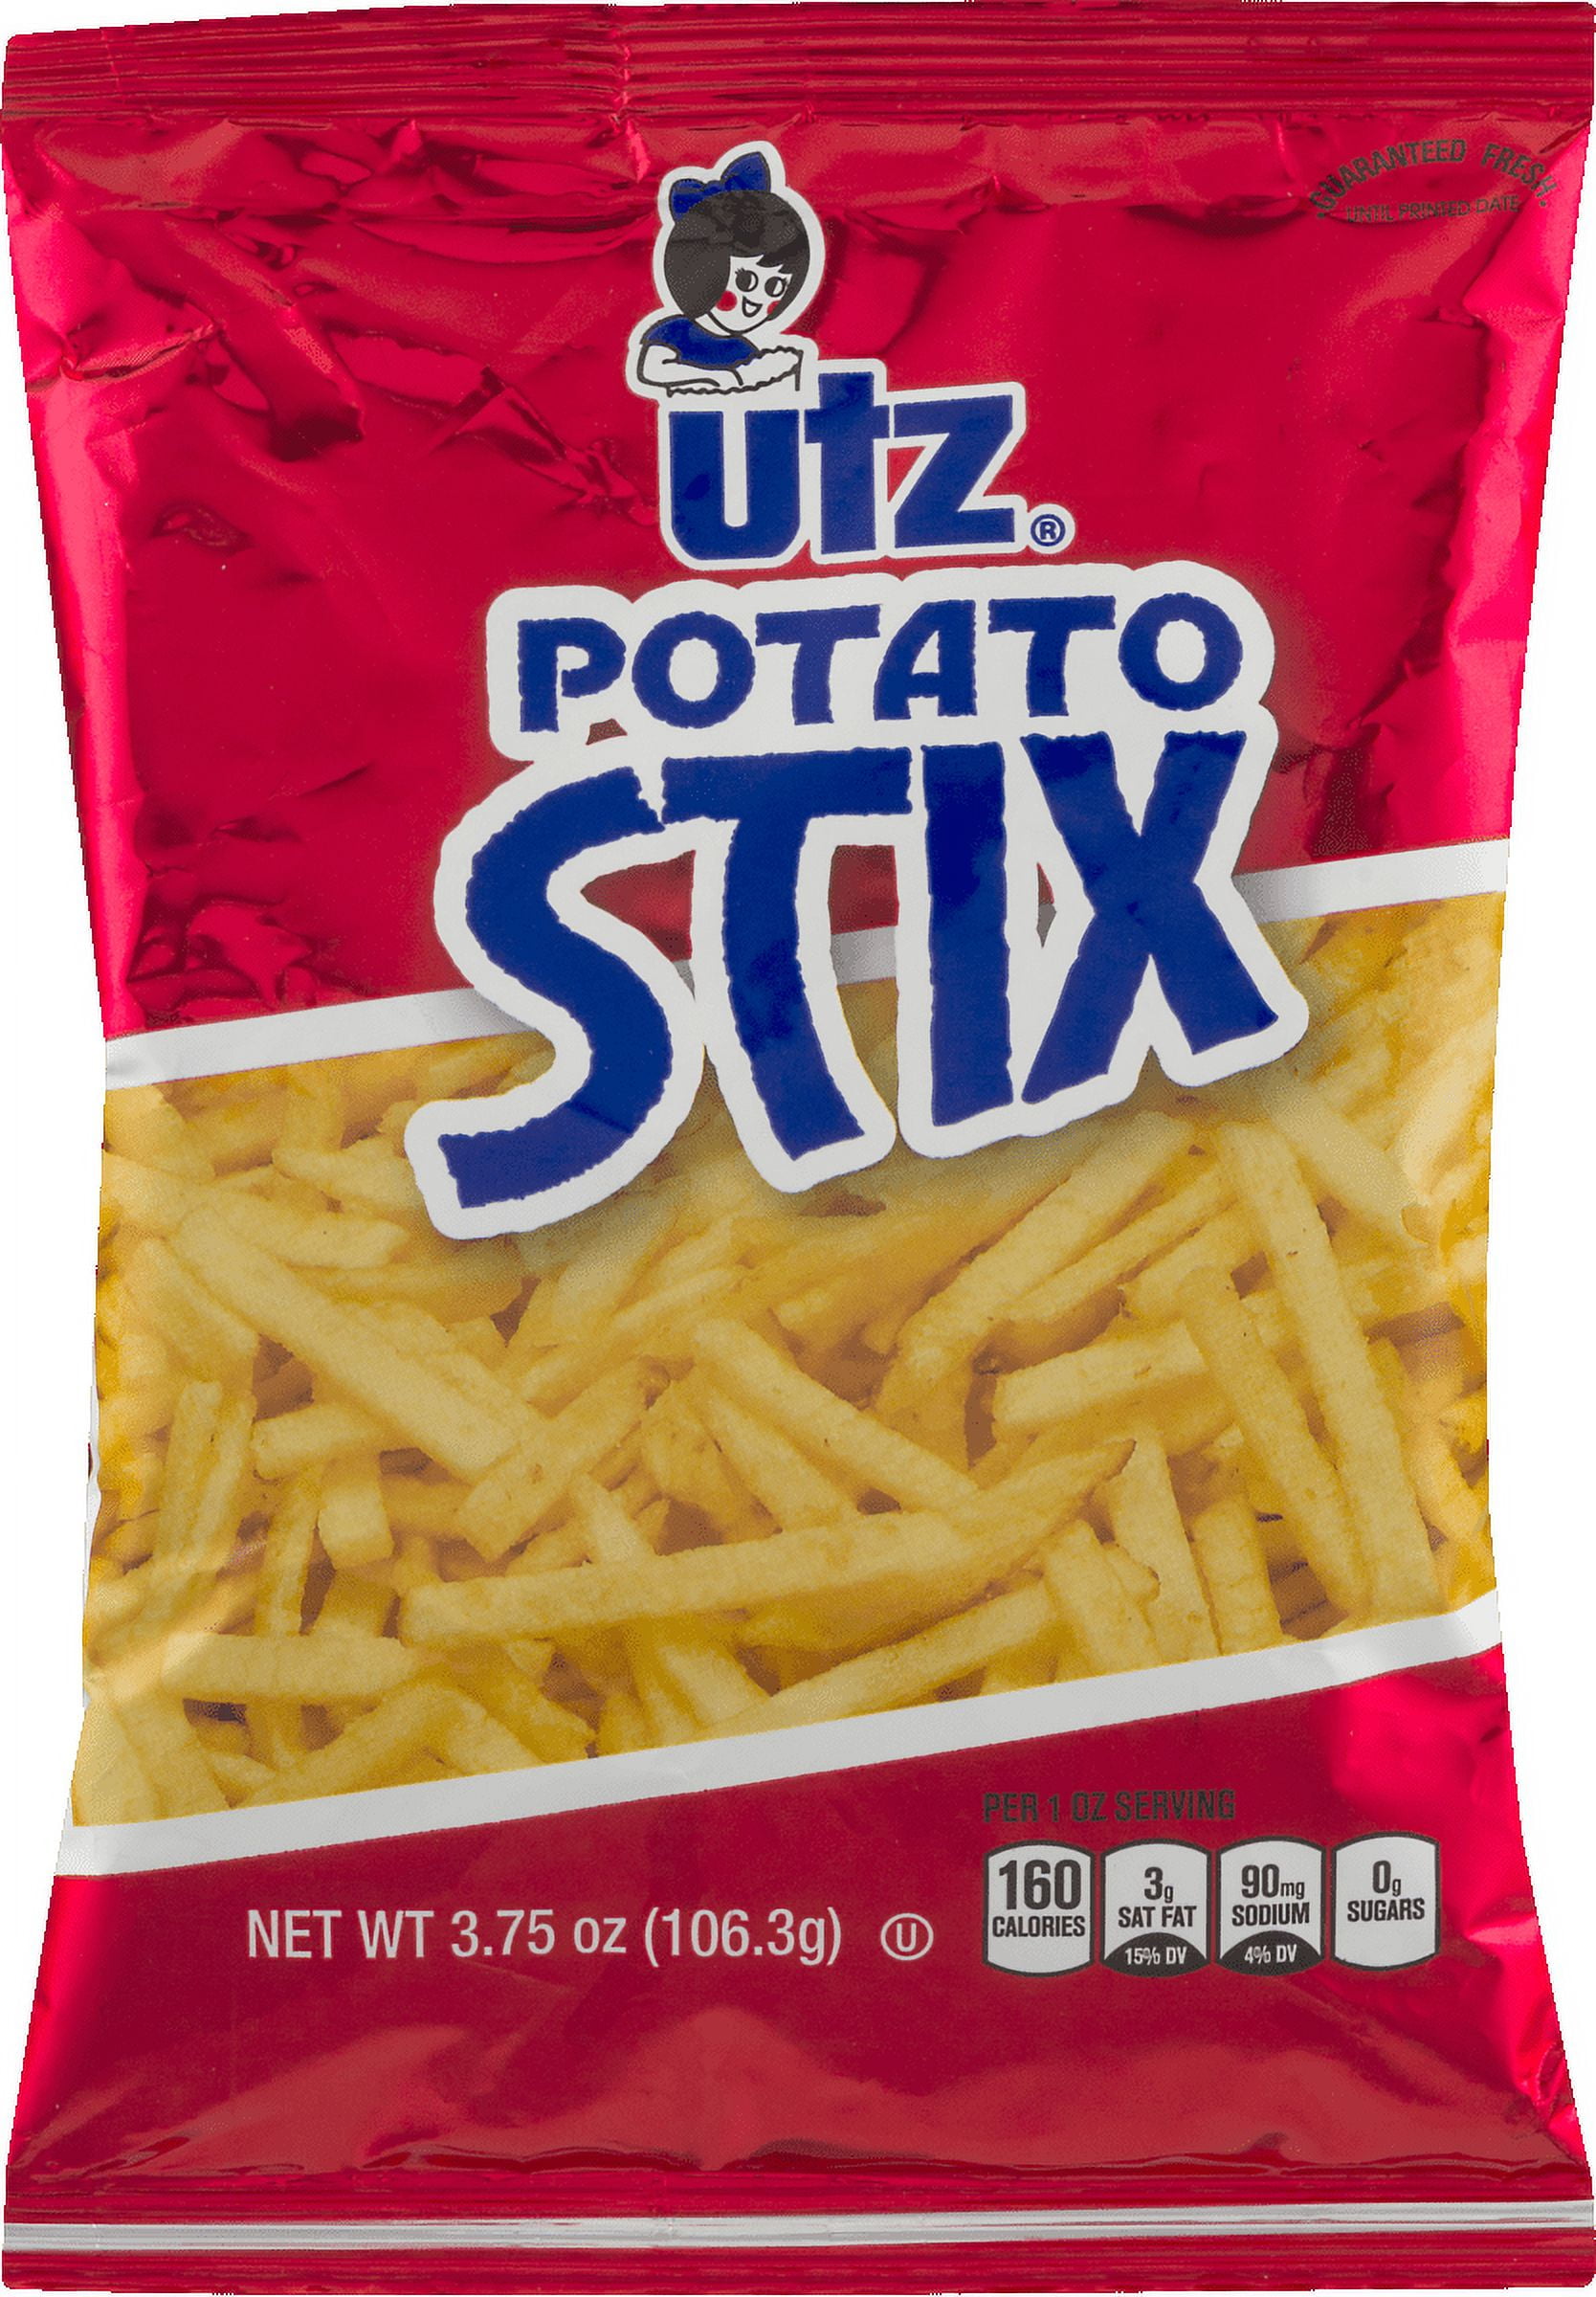 Utz Potato Stix, Original Potato Sticks